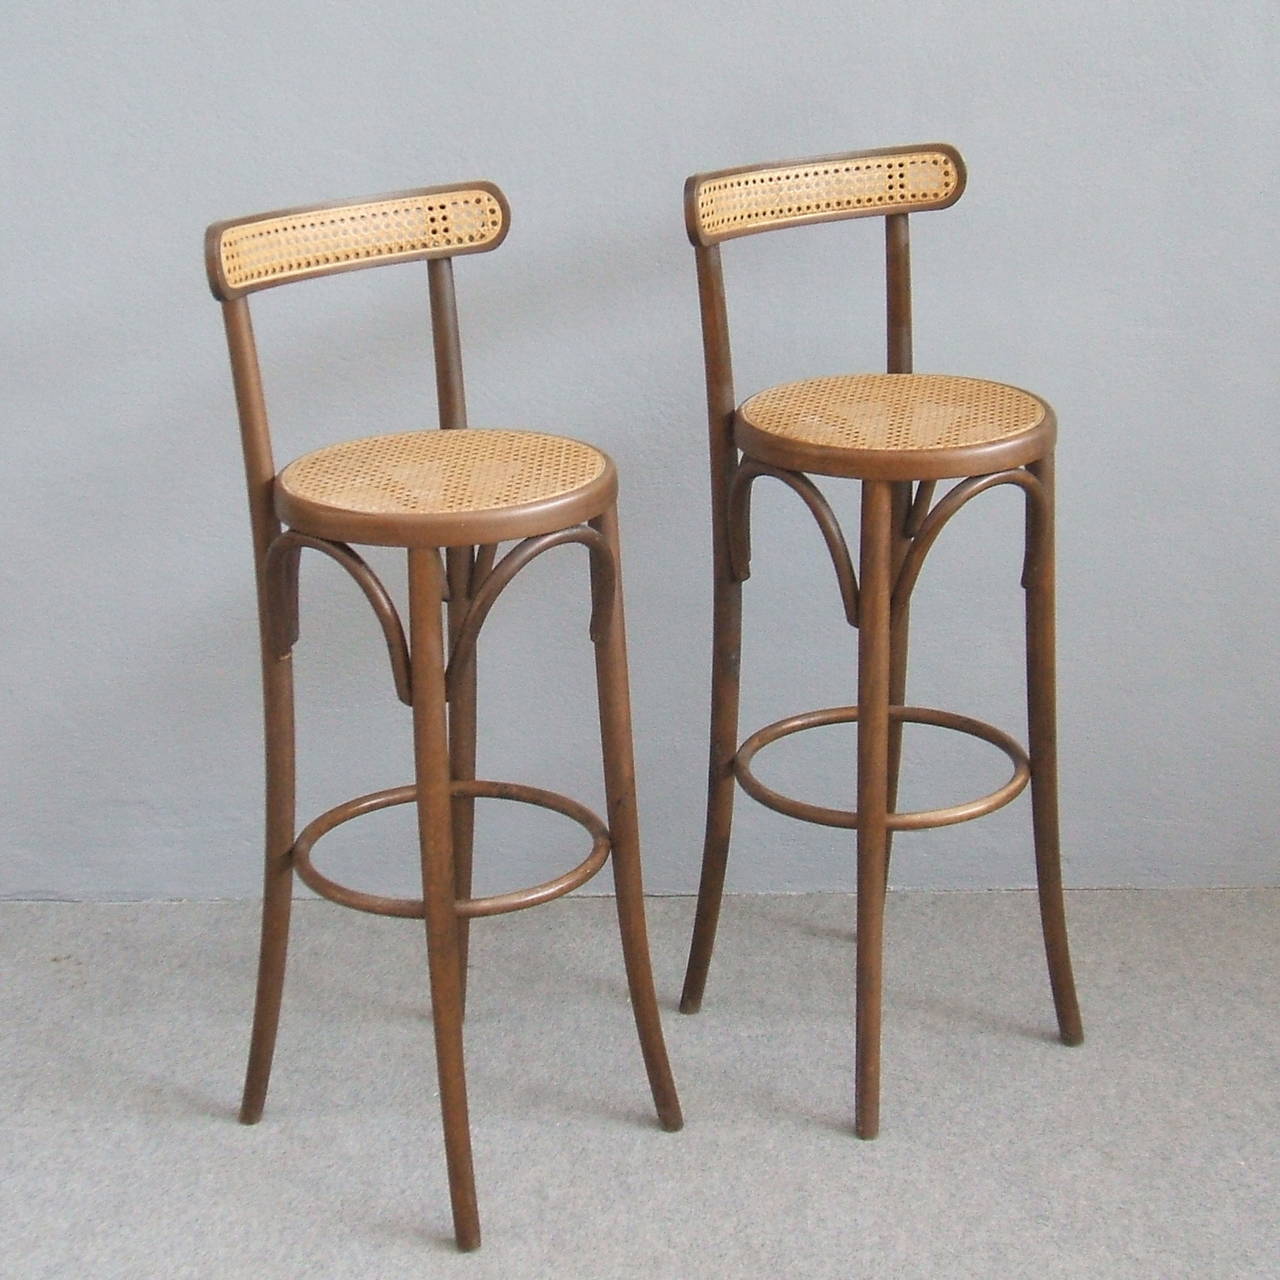 thonet stools